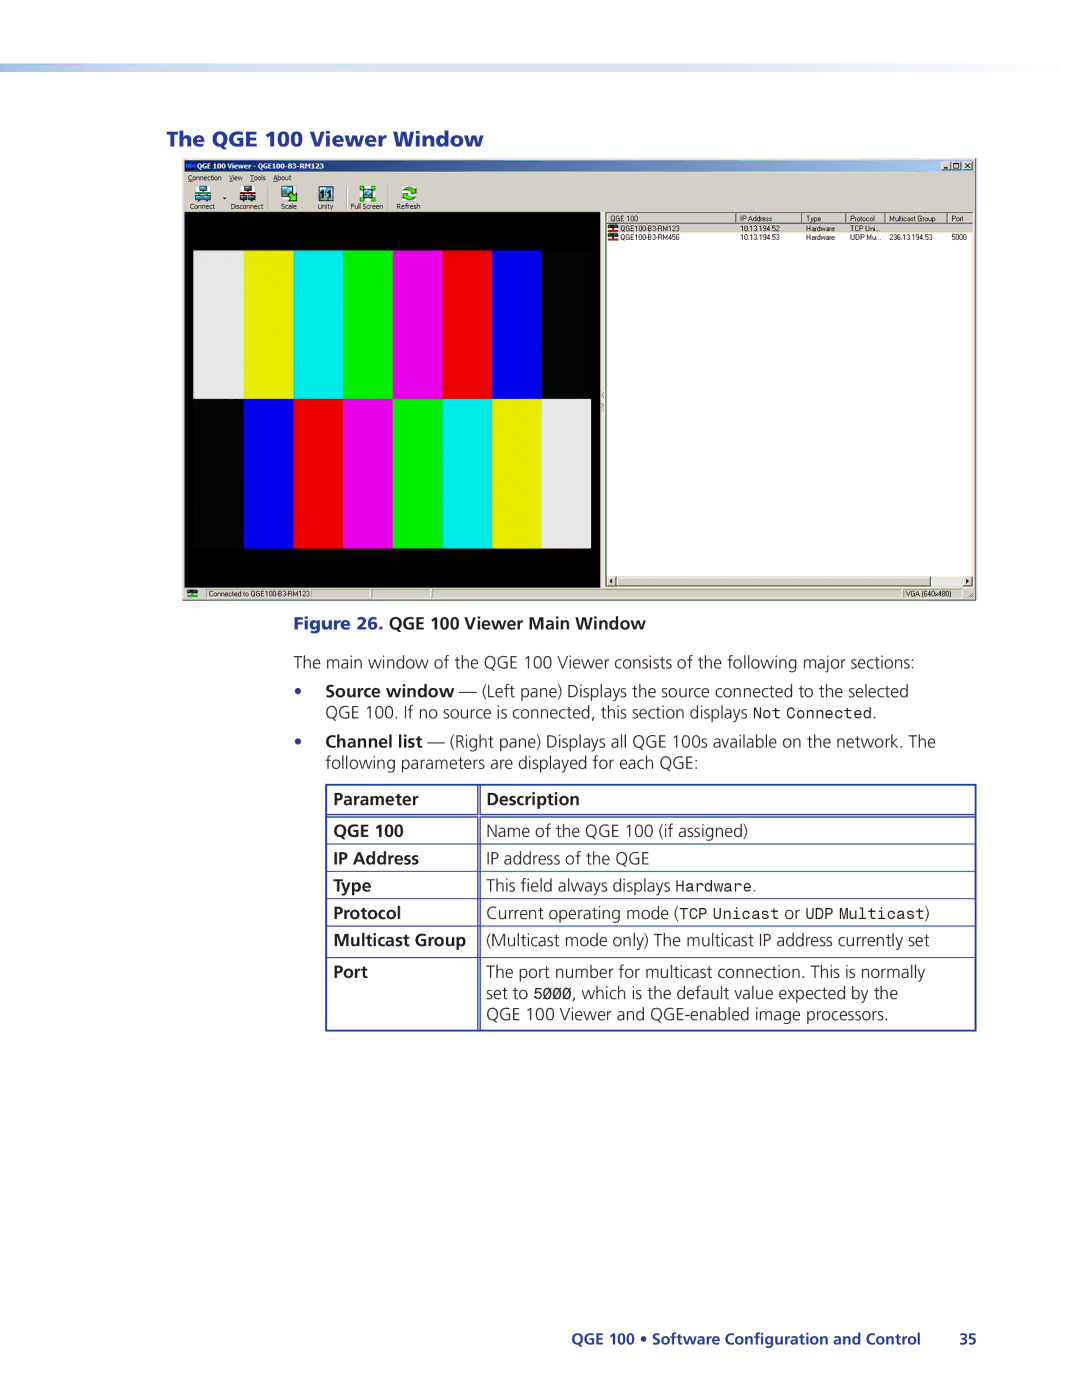 Extron electronic manual QGE 100 Viewer Window, Port 